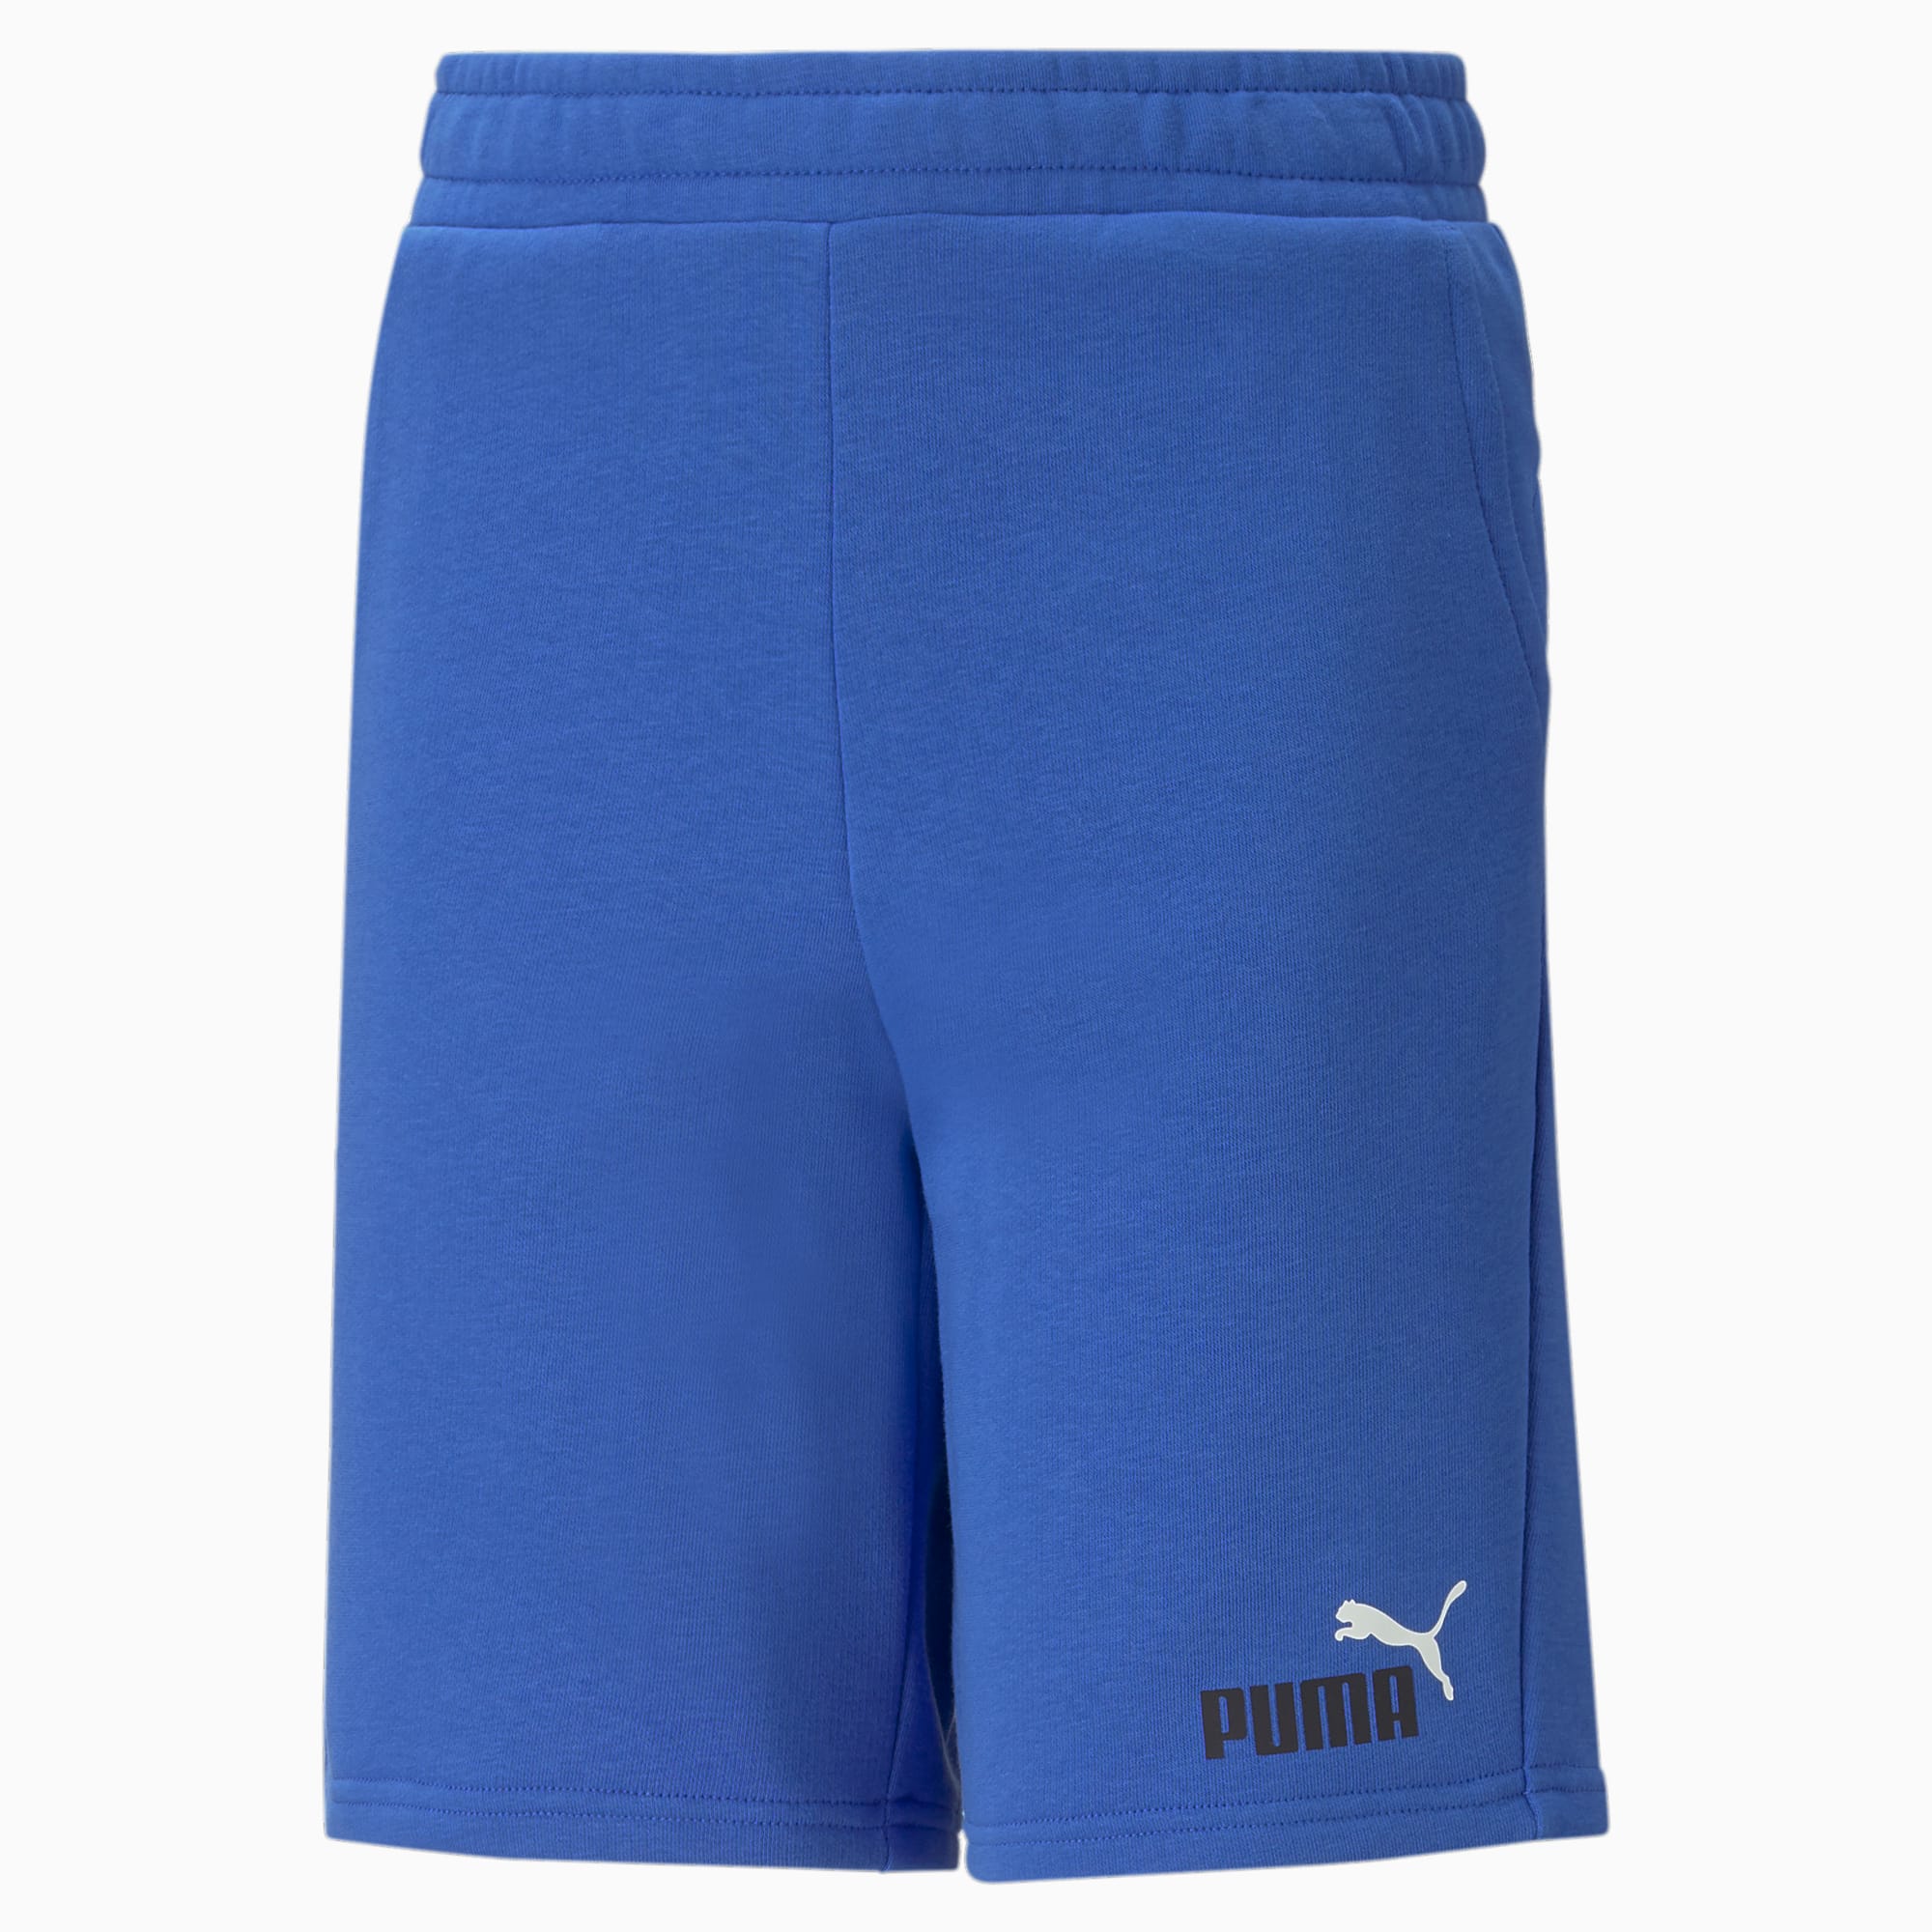 PUMA Essentials+ Two-Tone Youth Shorts, Royal Blue, Size 92, Clothing